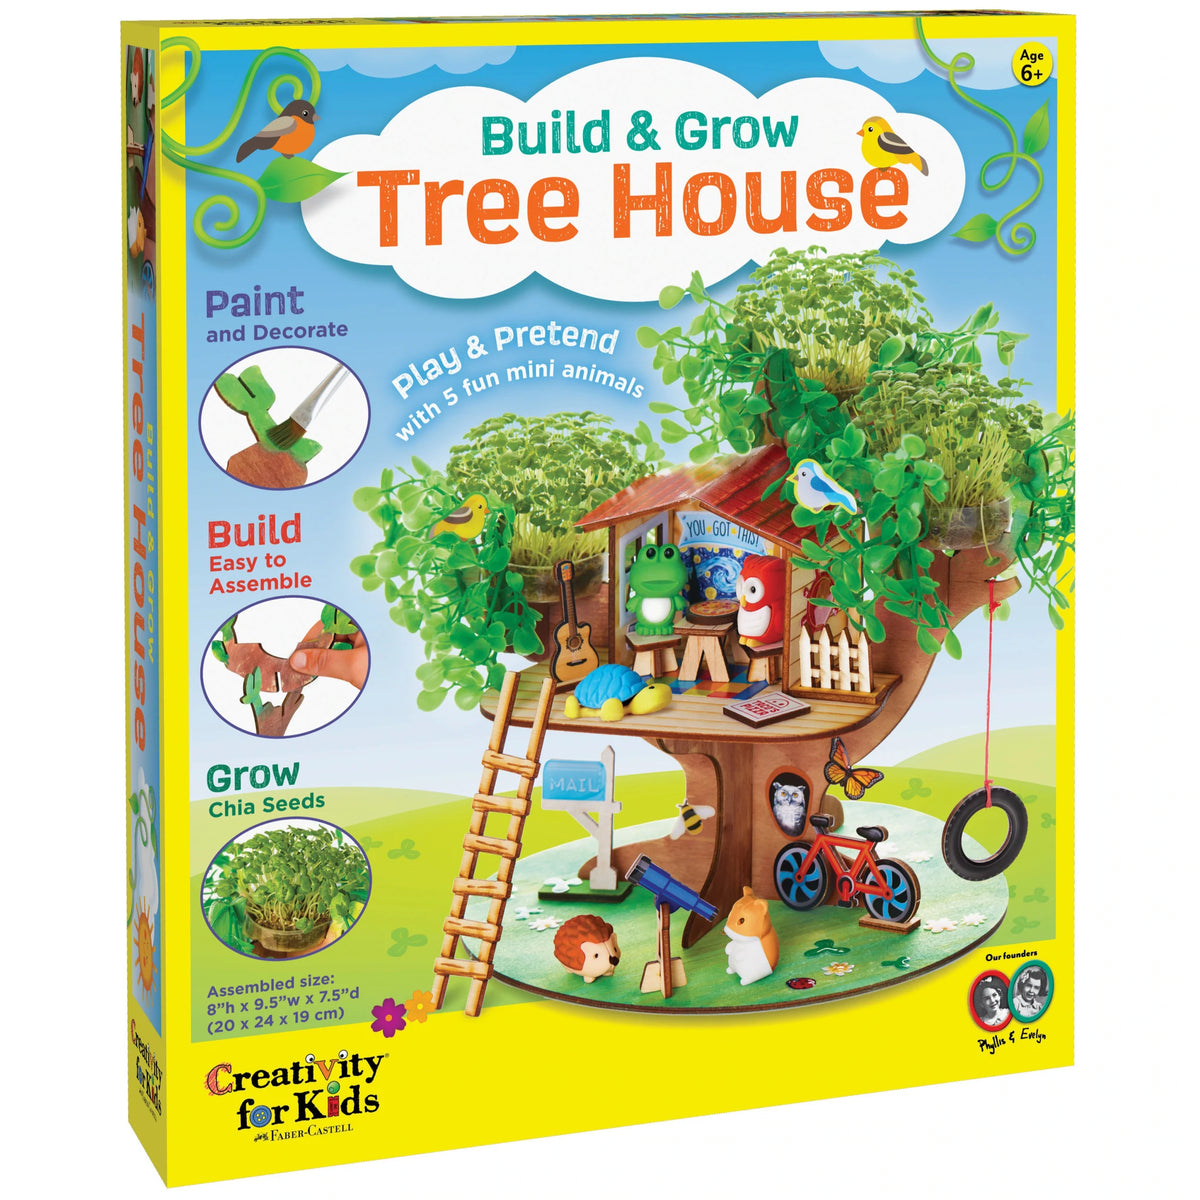 Build & Grow Treehouse Cover